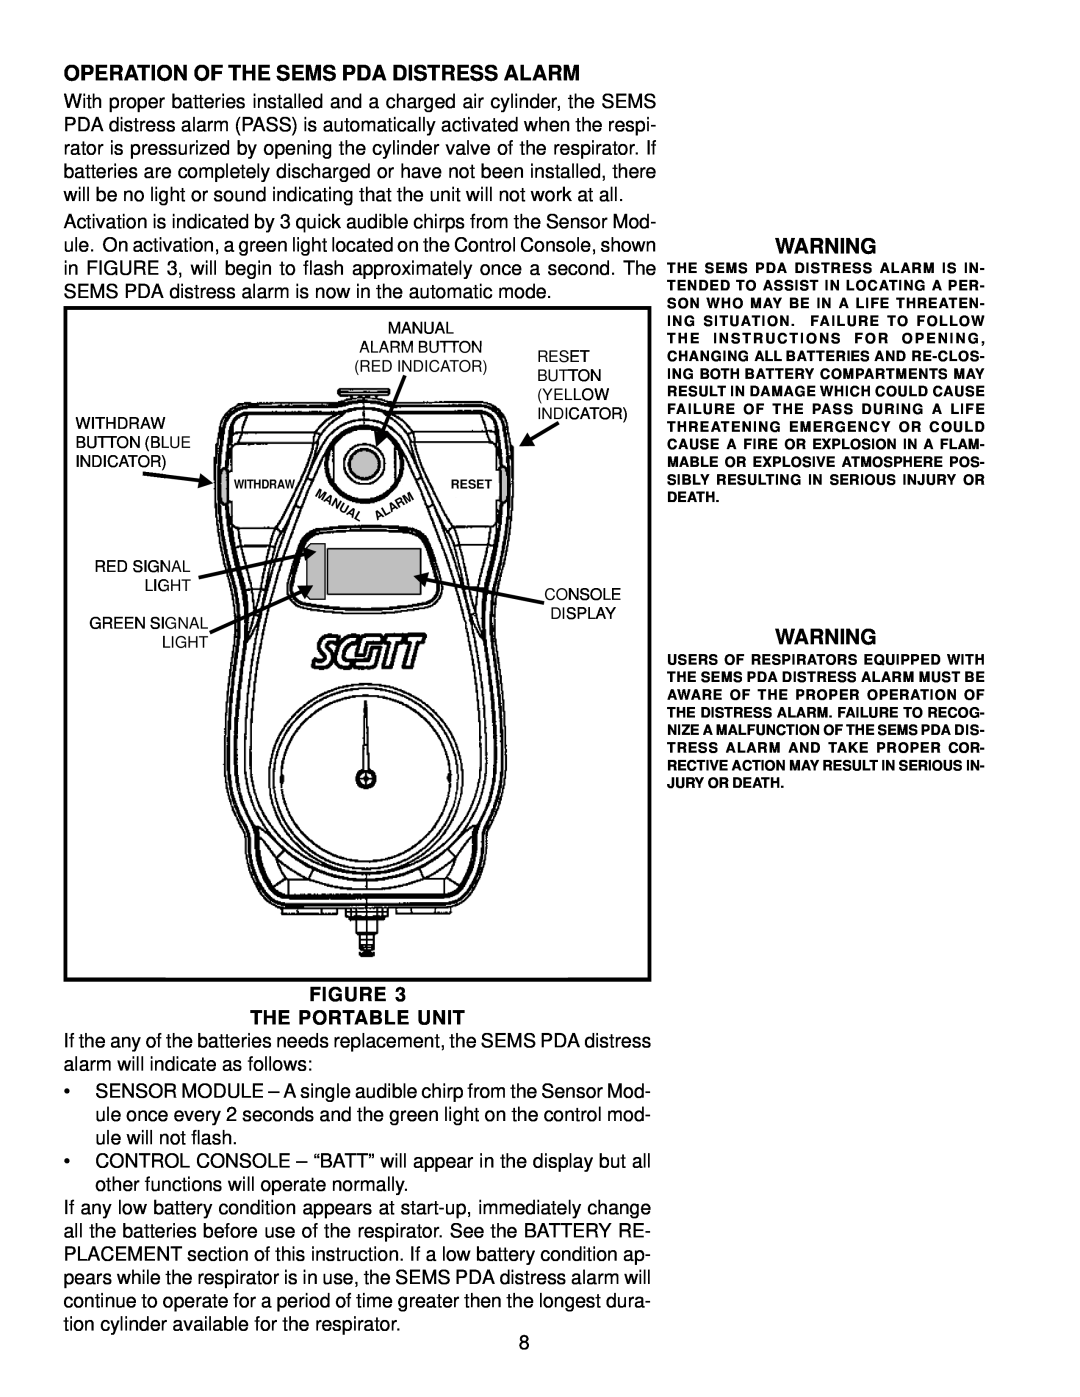 Scott 2.2, 4.5, 3 manual Operation Of The Sems Pda Distress Alarm, The Portable Unit 